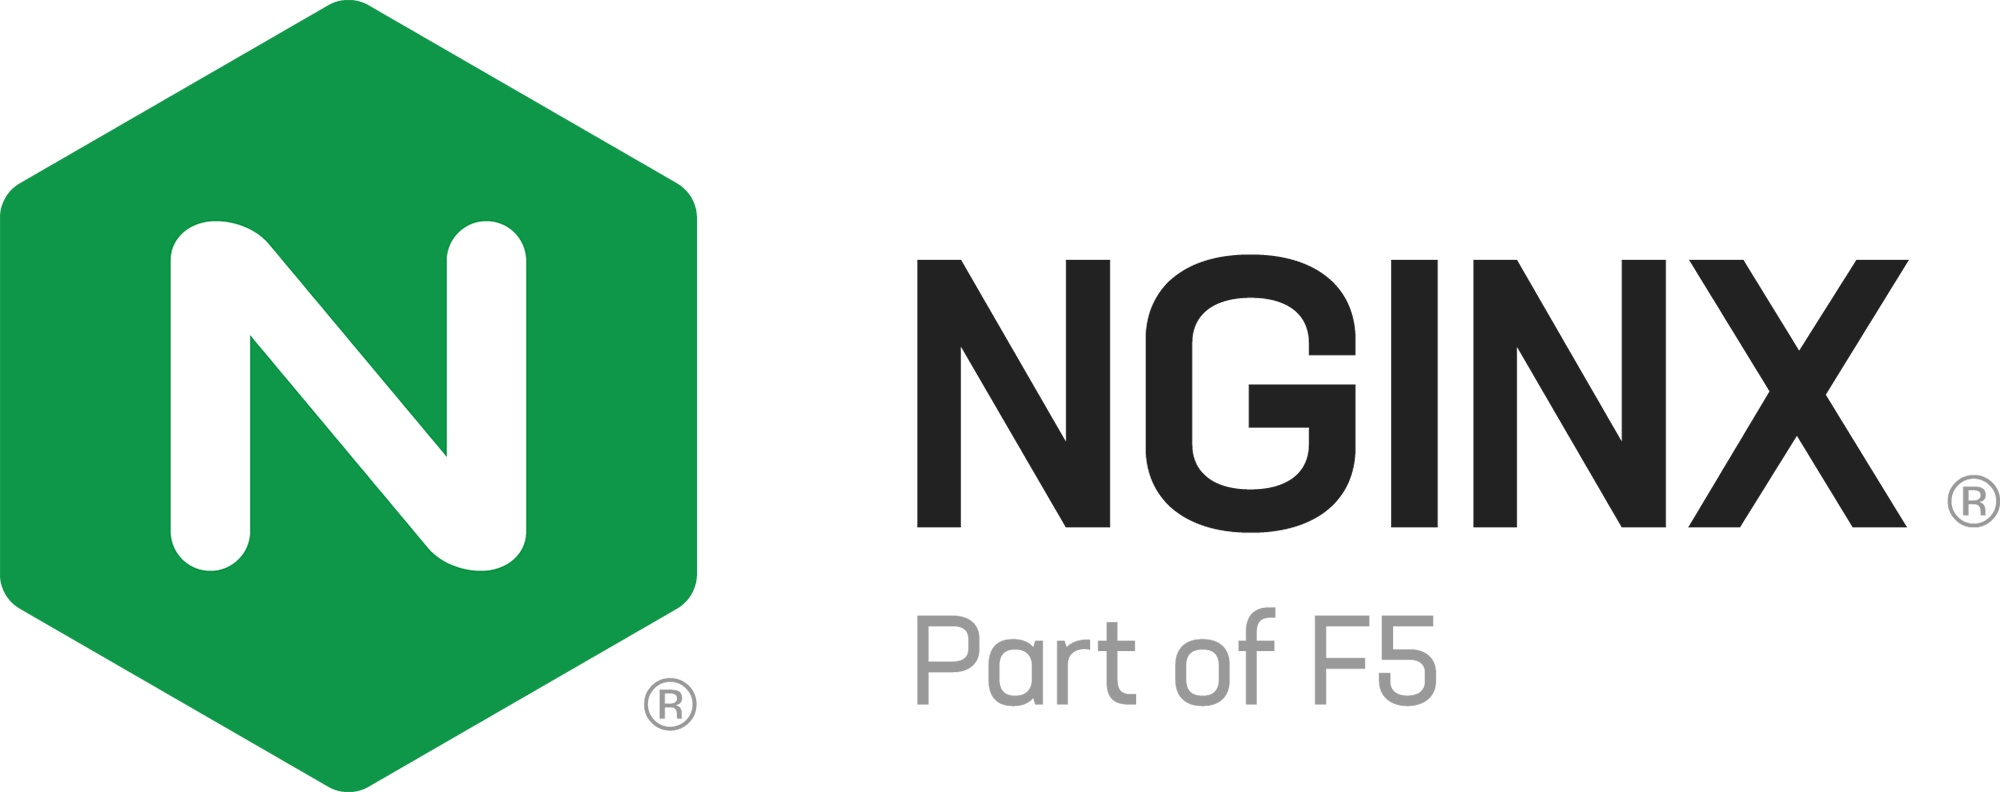 NGiNX Enterprise